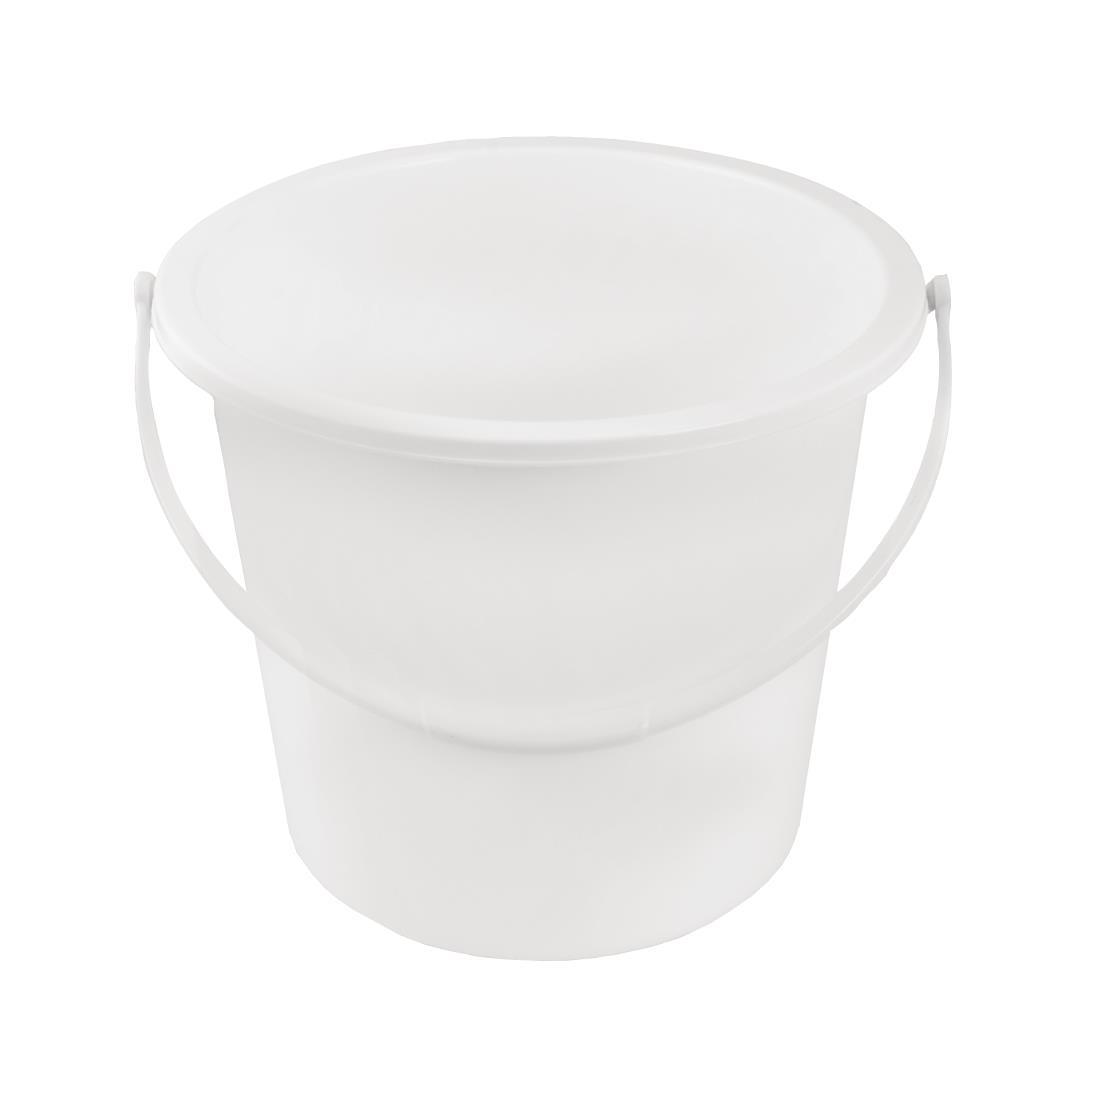 Jantex Round Plastic Bucket White 10Ltr - DA420  - 1